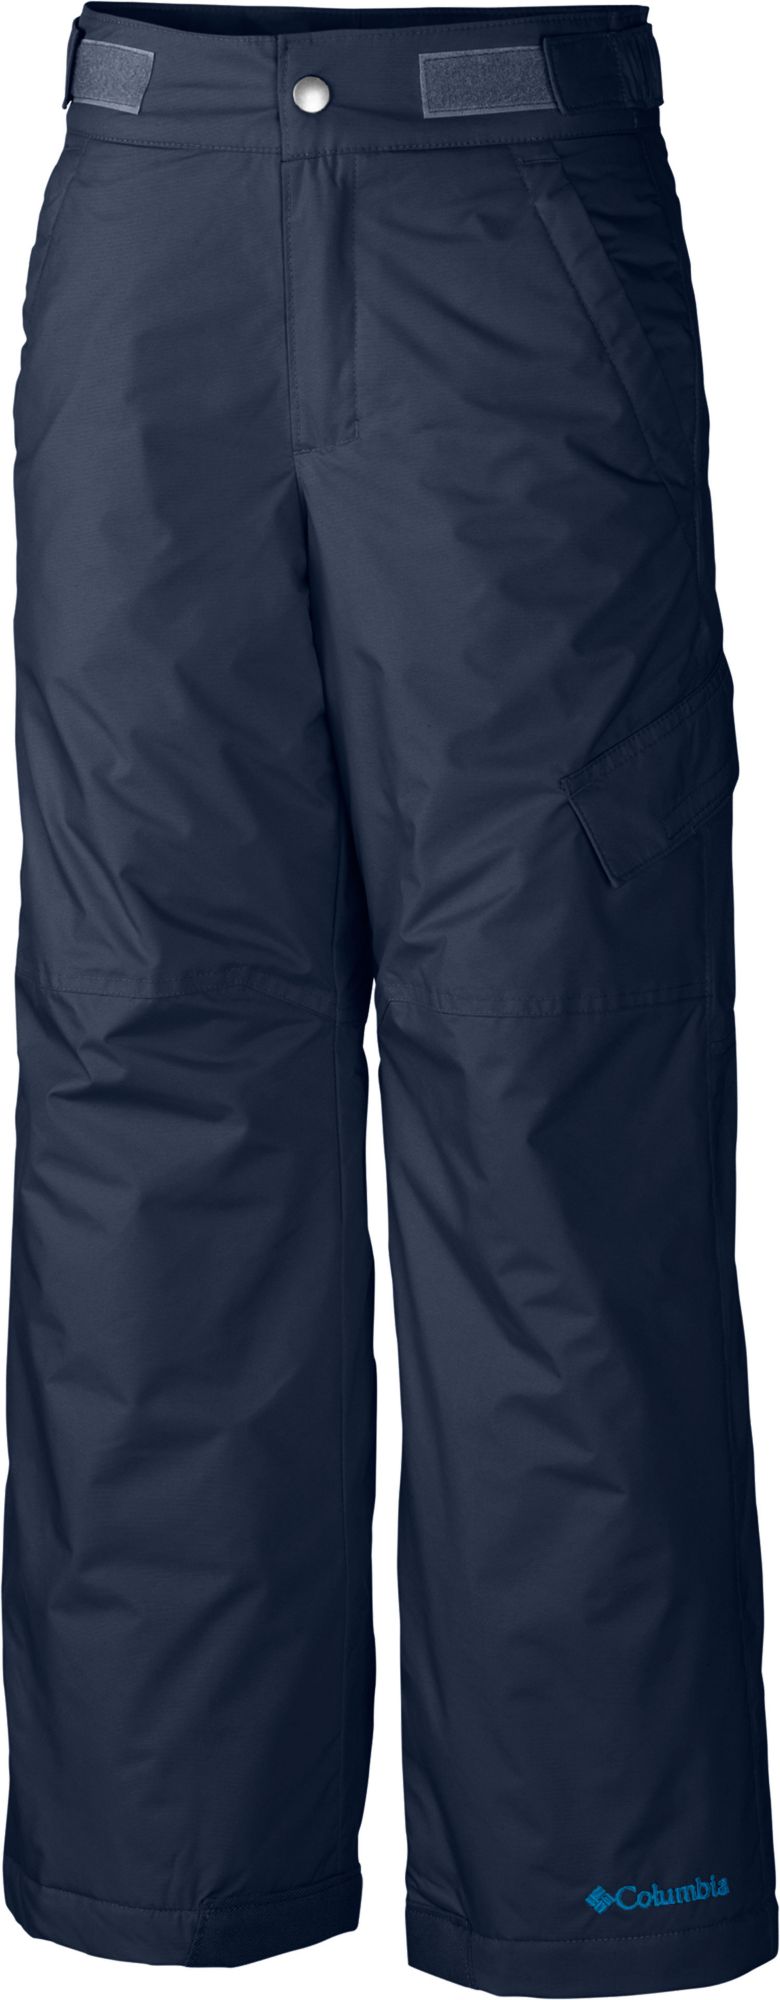 Snow Pants & Ski Pants | DICK'S Sporting Goods